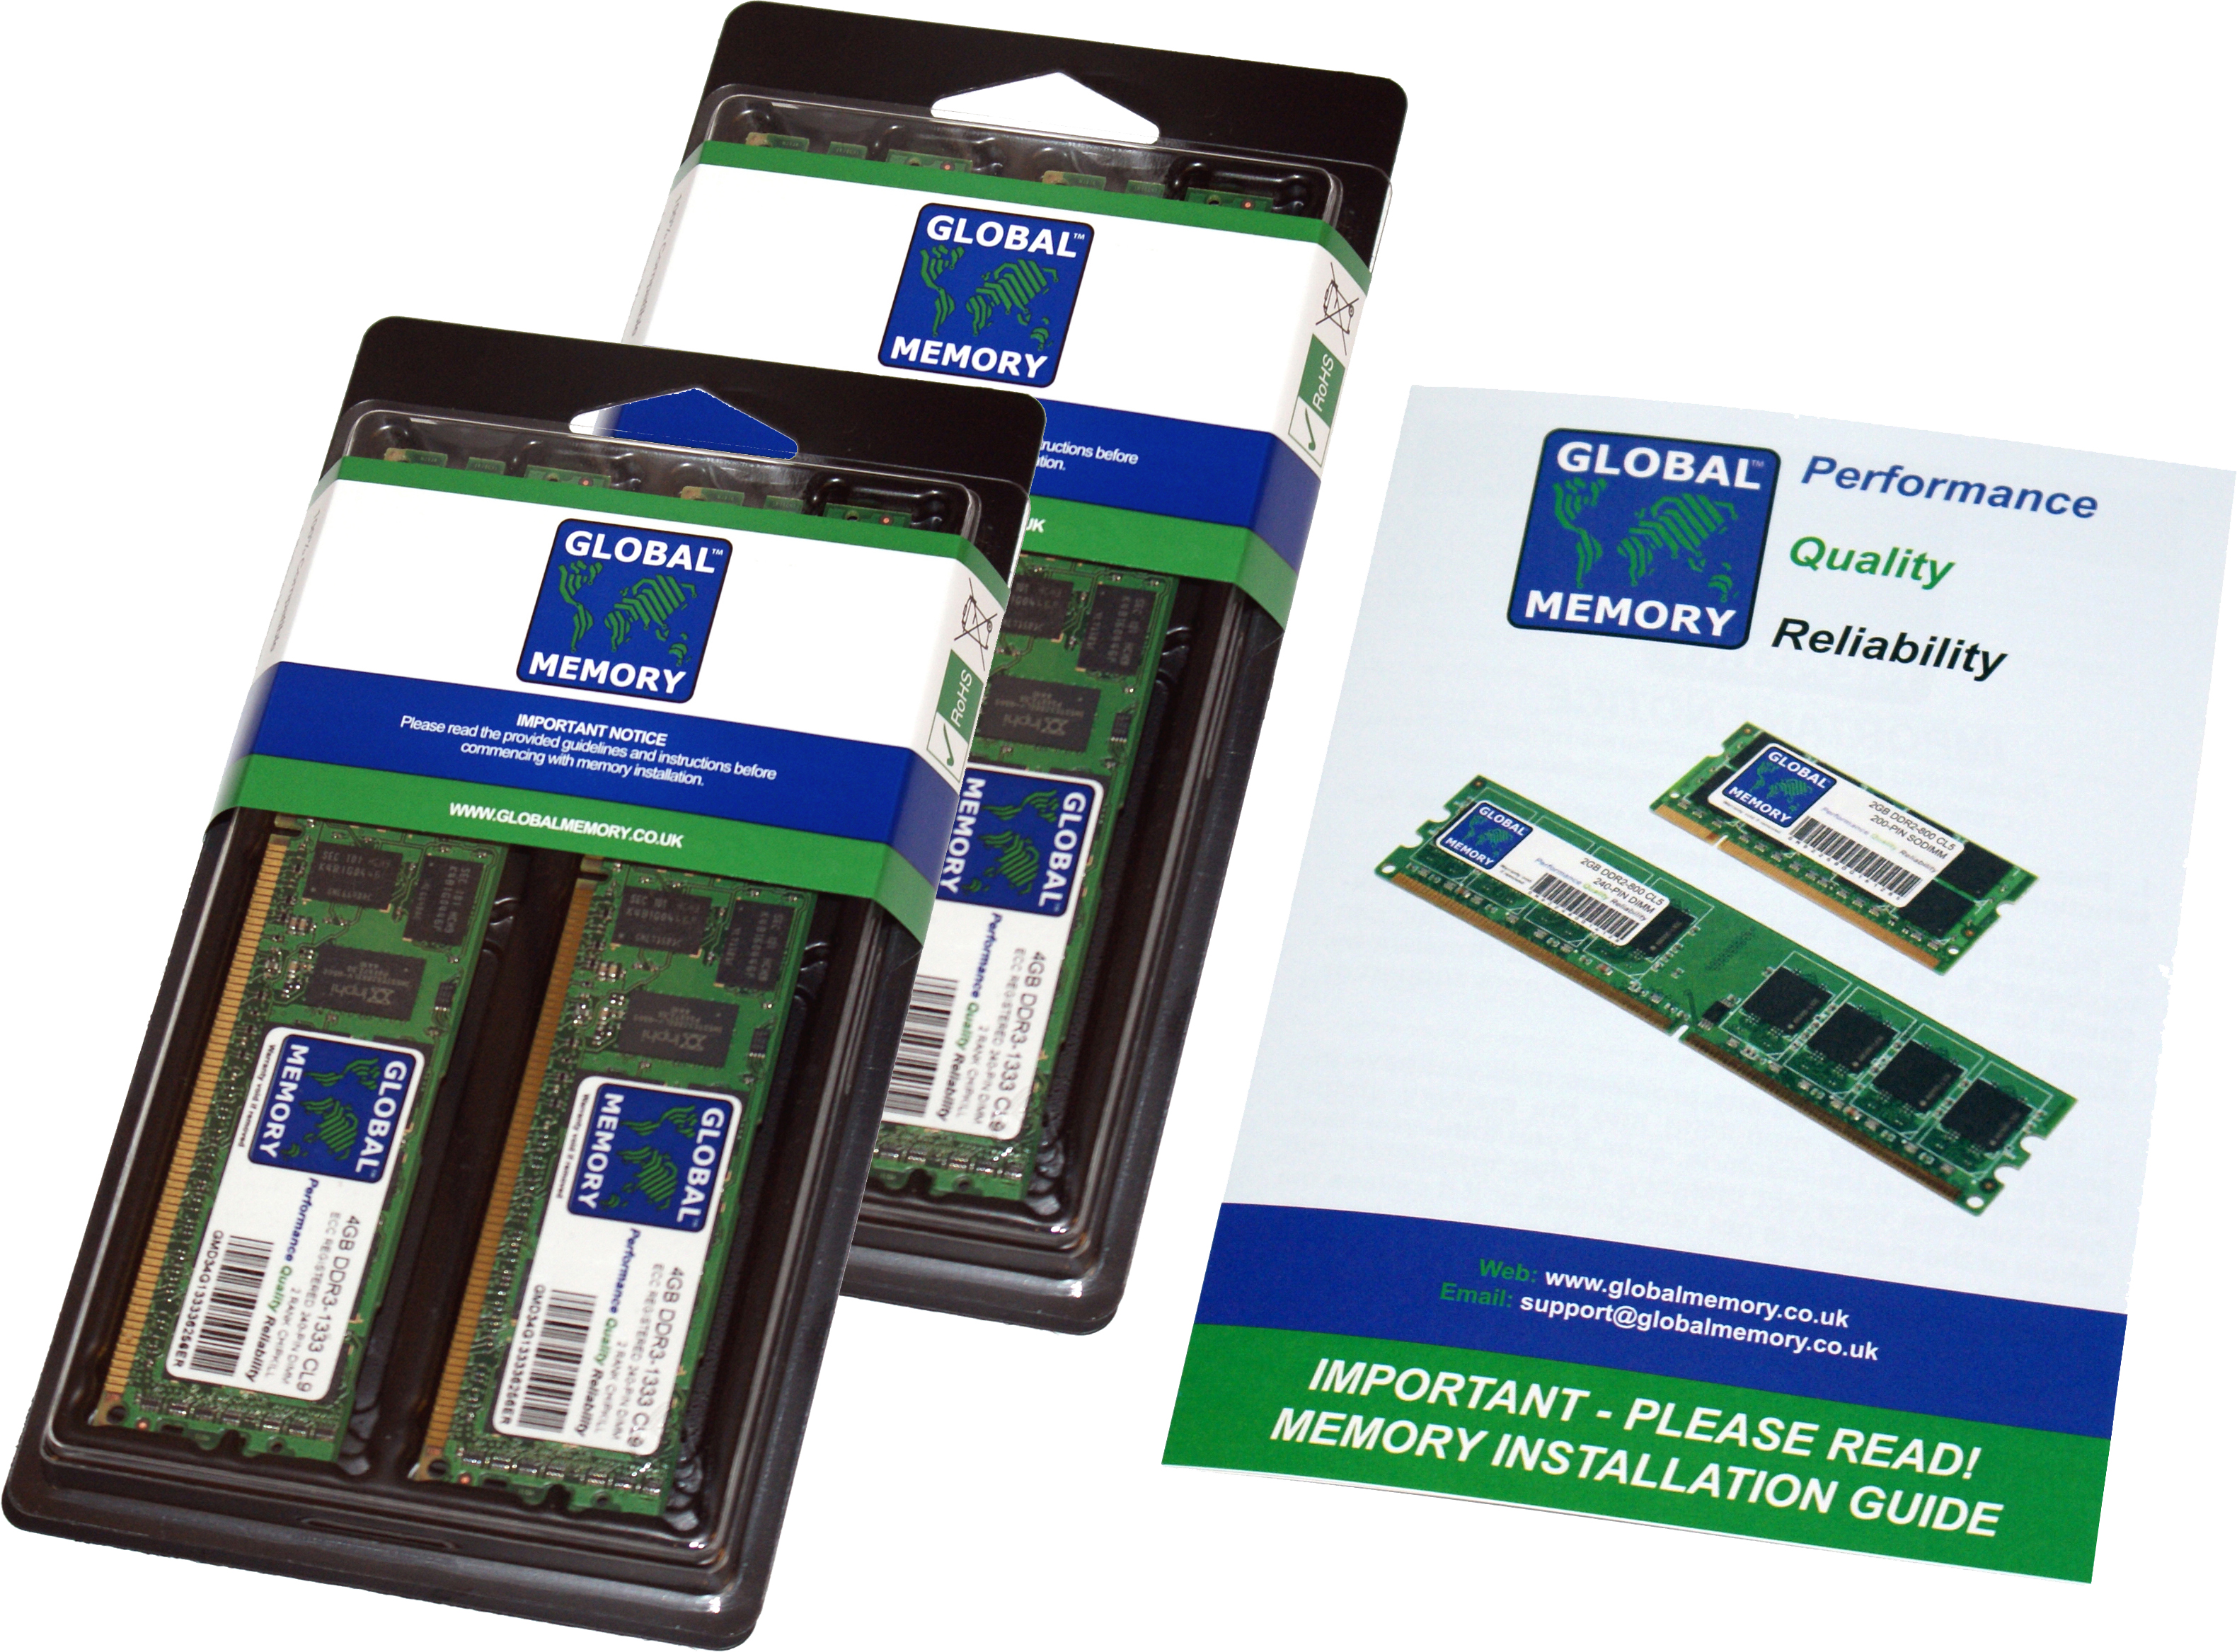 128GB (4 x 32GB) DDR4 2133MHz PC4-17000 288-PIN ECC REGISTERED DIMM (RDIMM) MEMORY RAM KIT FOR DELL SERVERS/WORKSTATIONS (8 RANK KIT CHIPKILL)